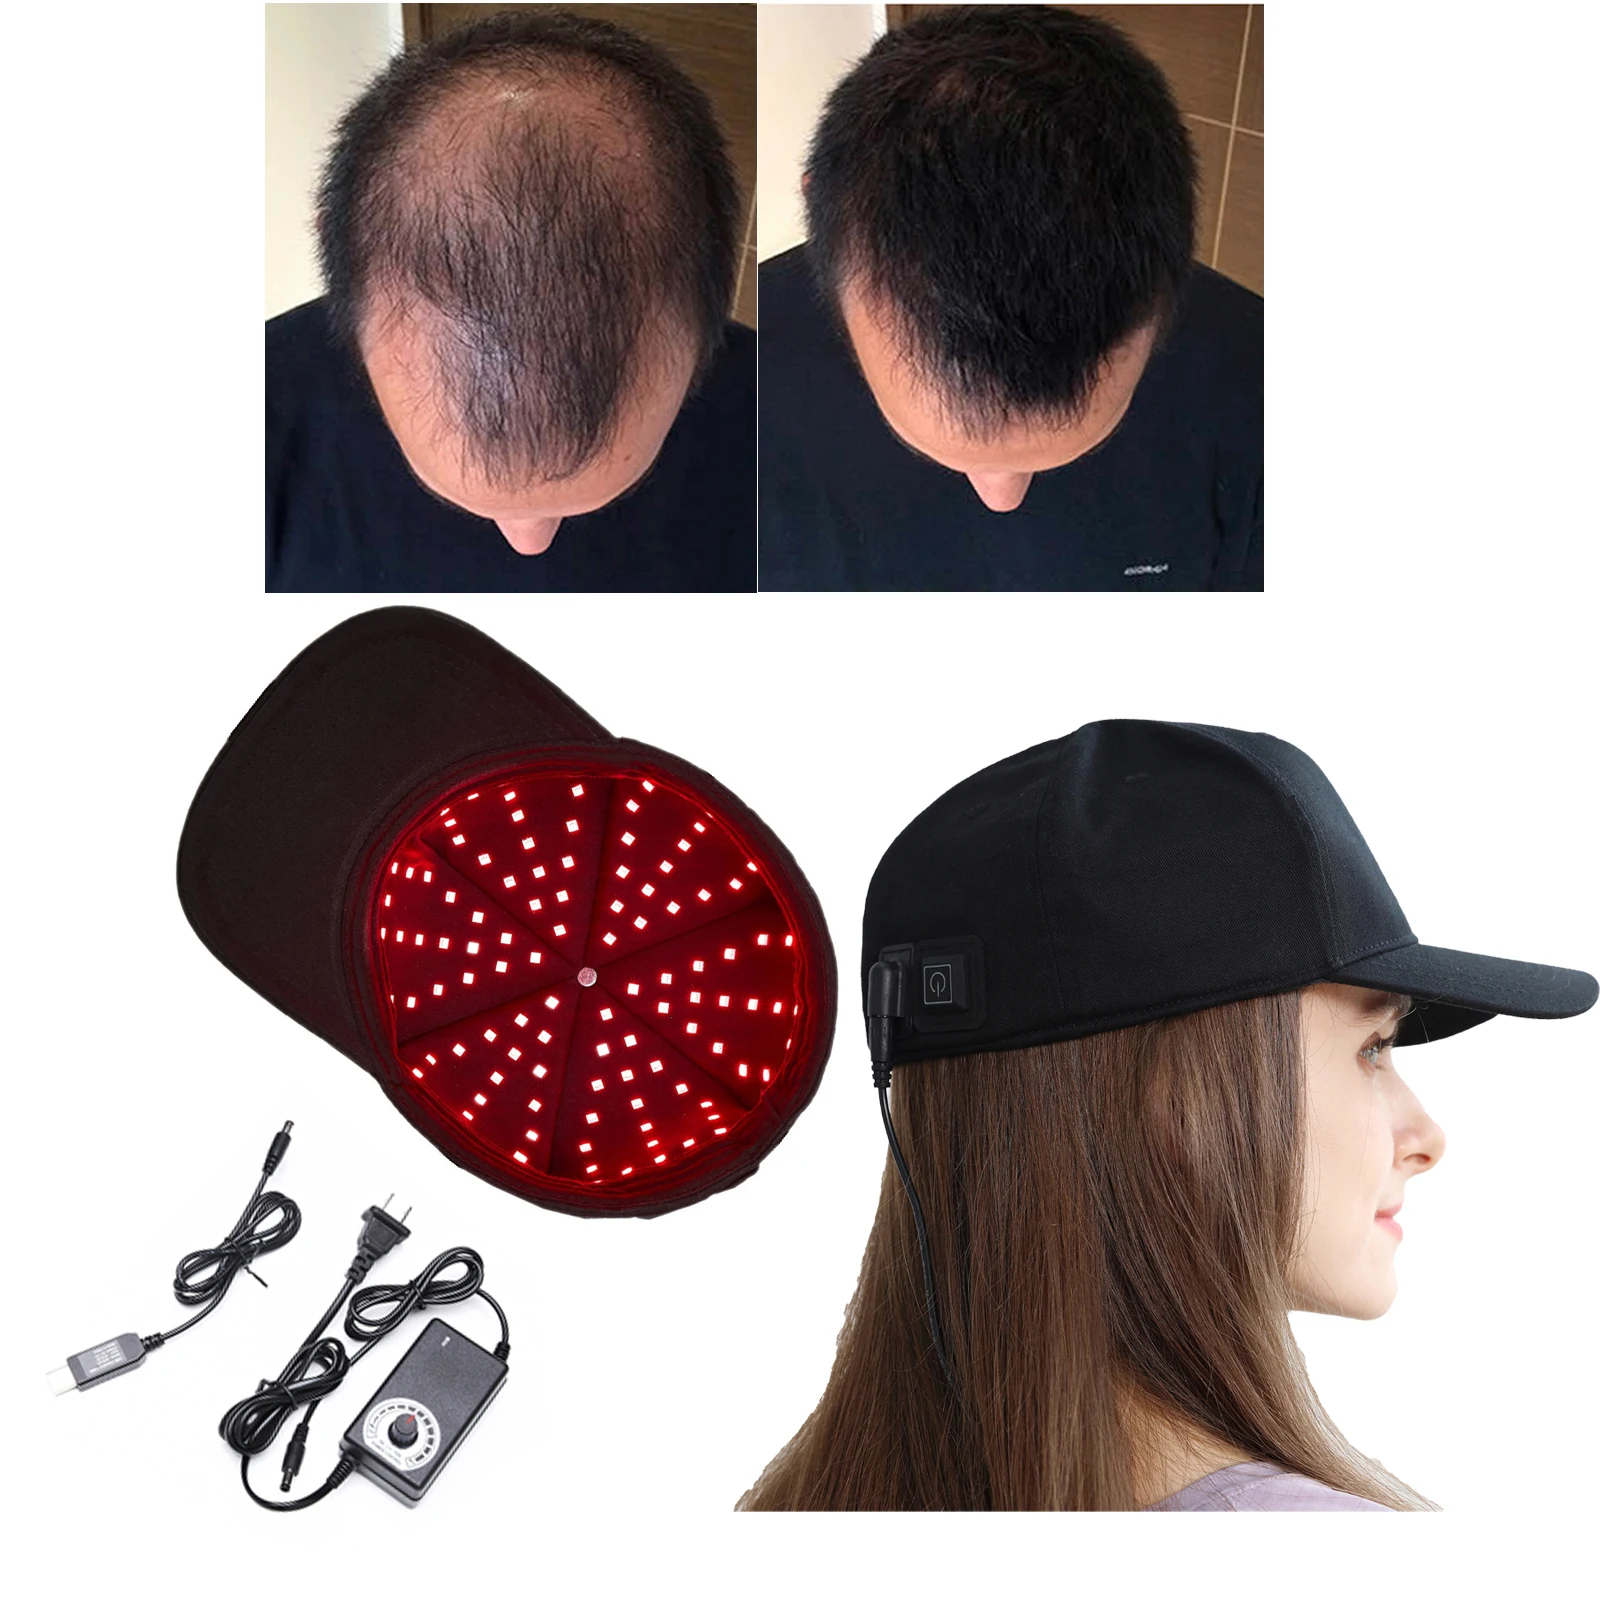 

LED Hair Growth Cap 660nm 850nm 940nm LED Chips Anti Hair Loss,Red Light Therapy Cap Hair Regrowth Treatment Machine